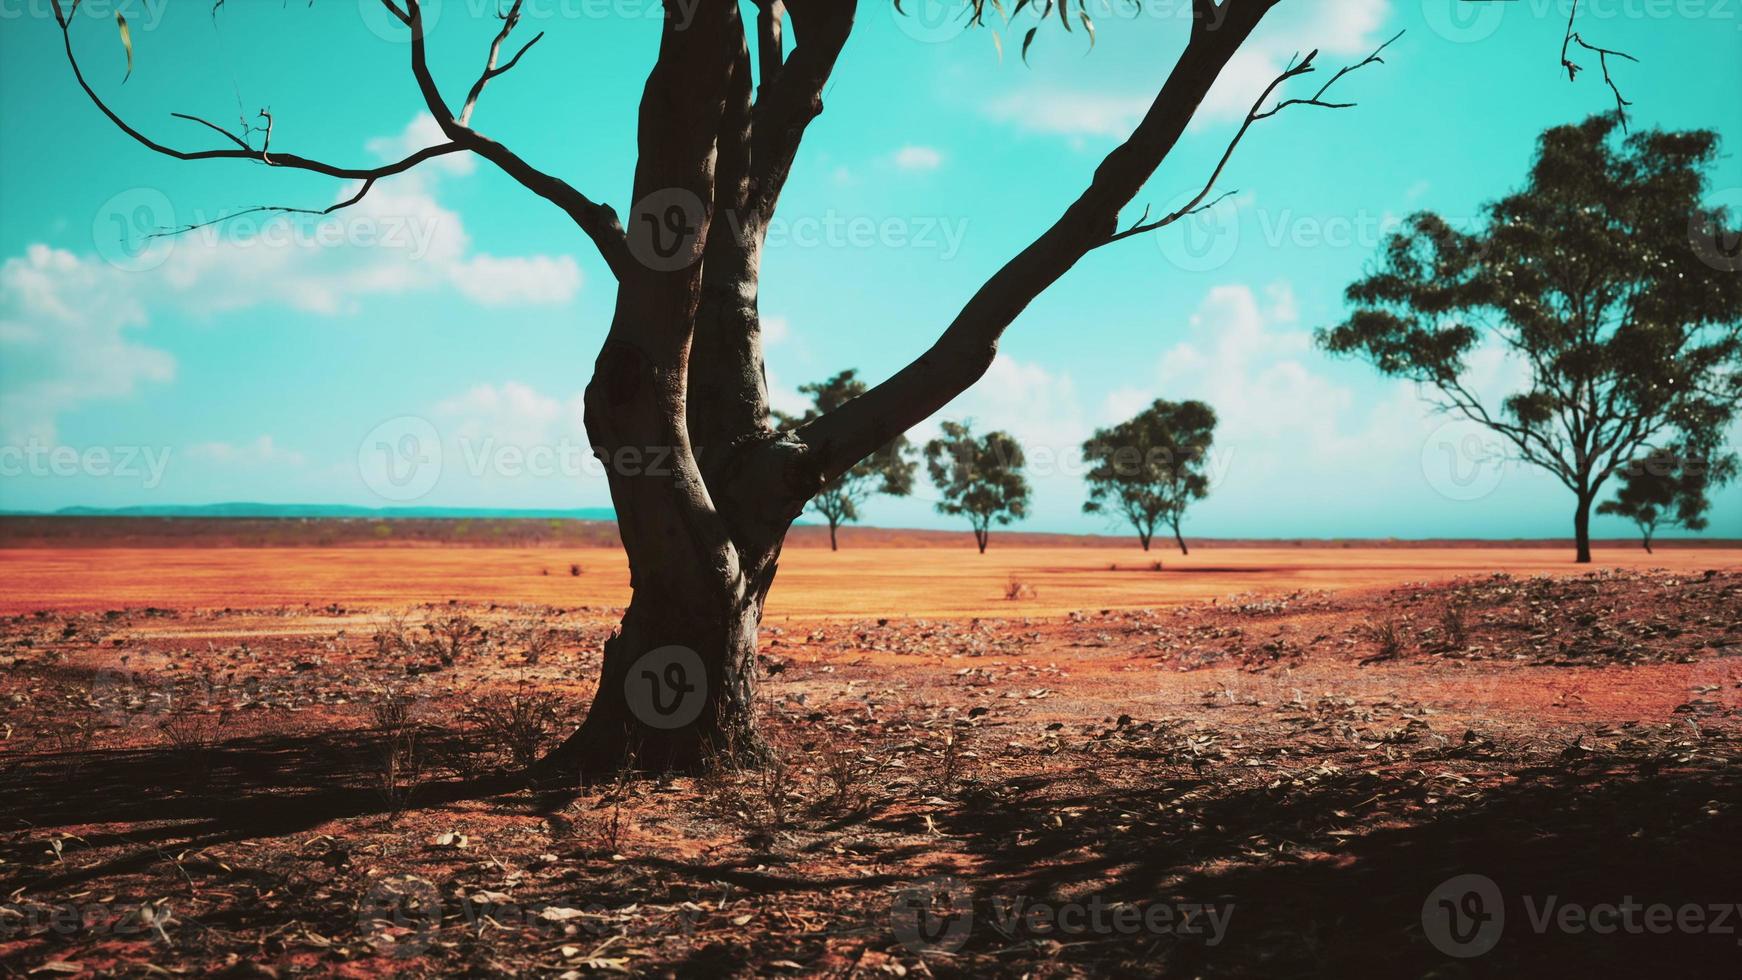 acacia tree in the open savanna plains of East Africa Botswana photo